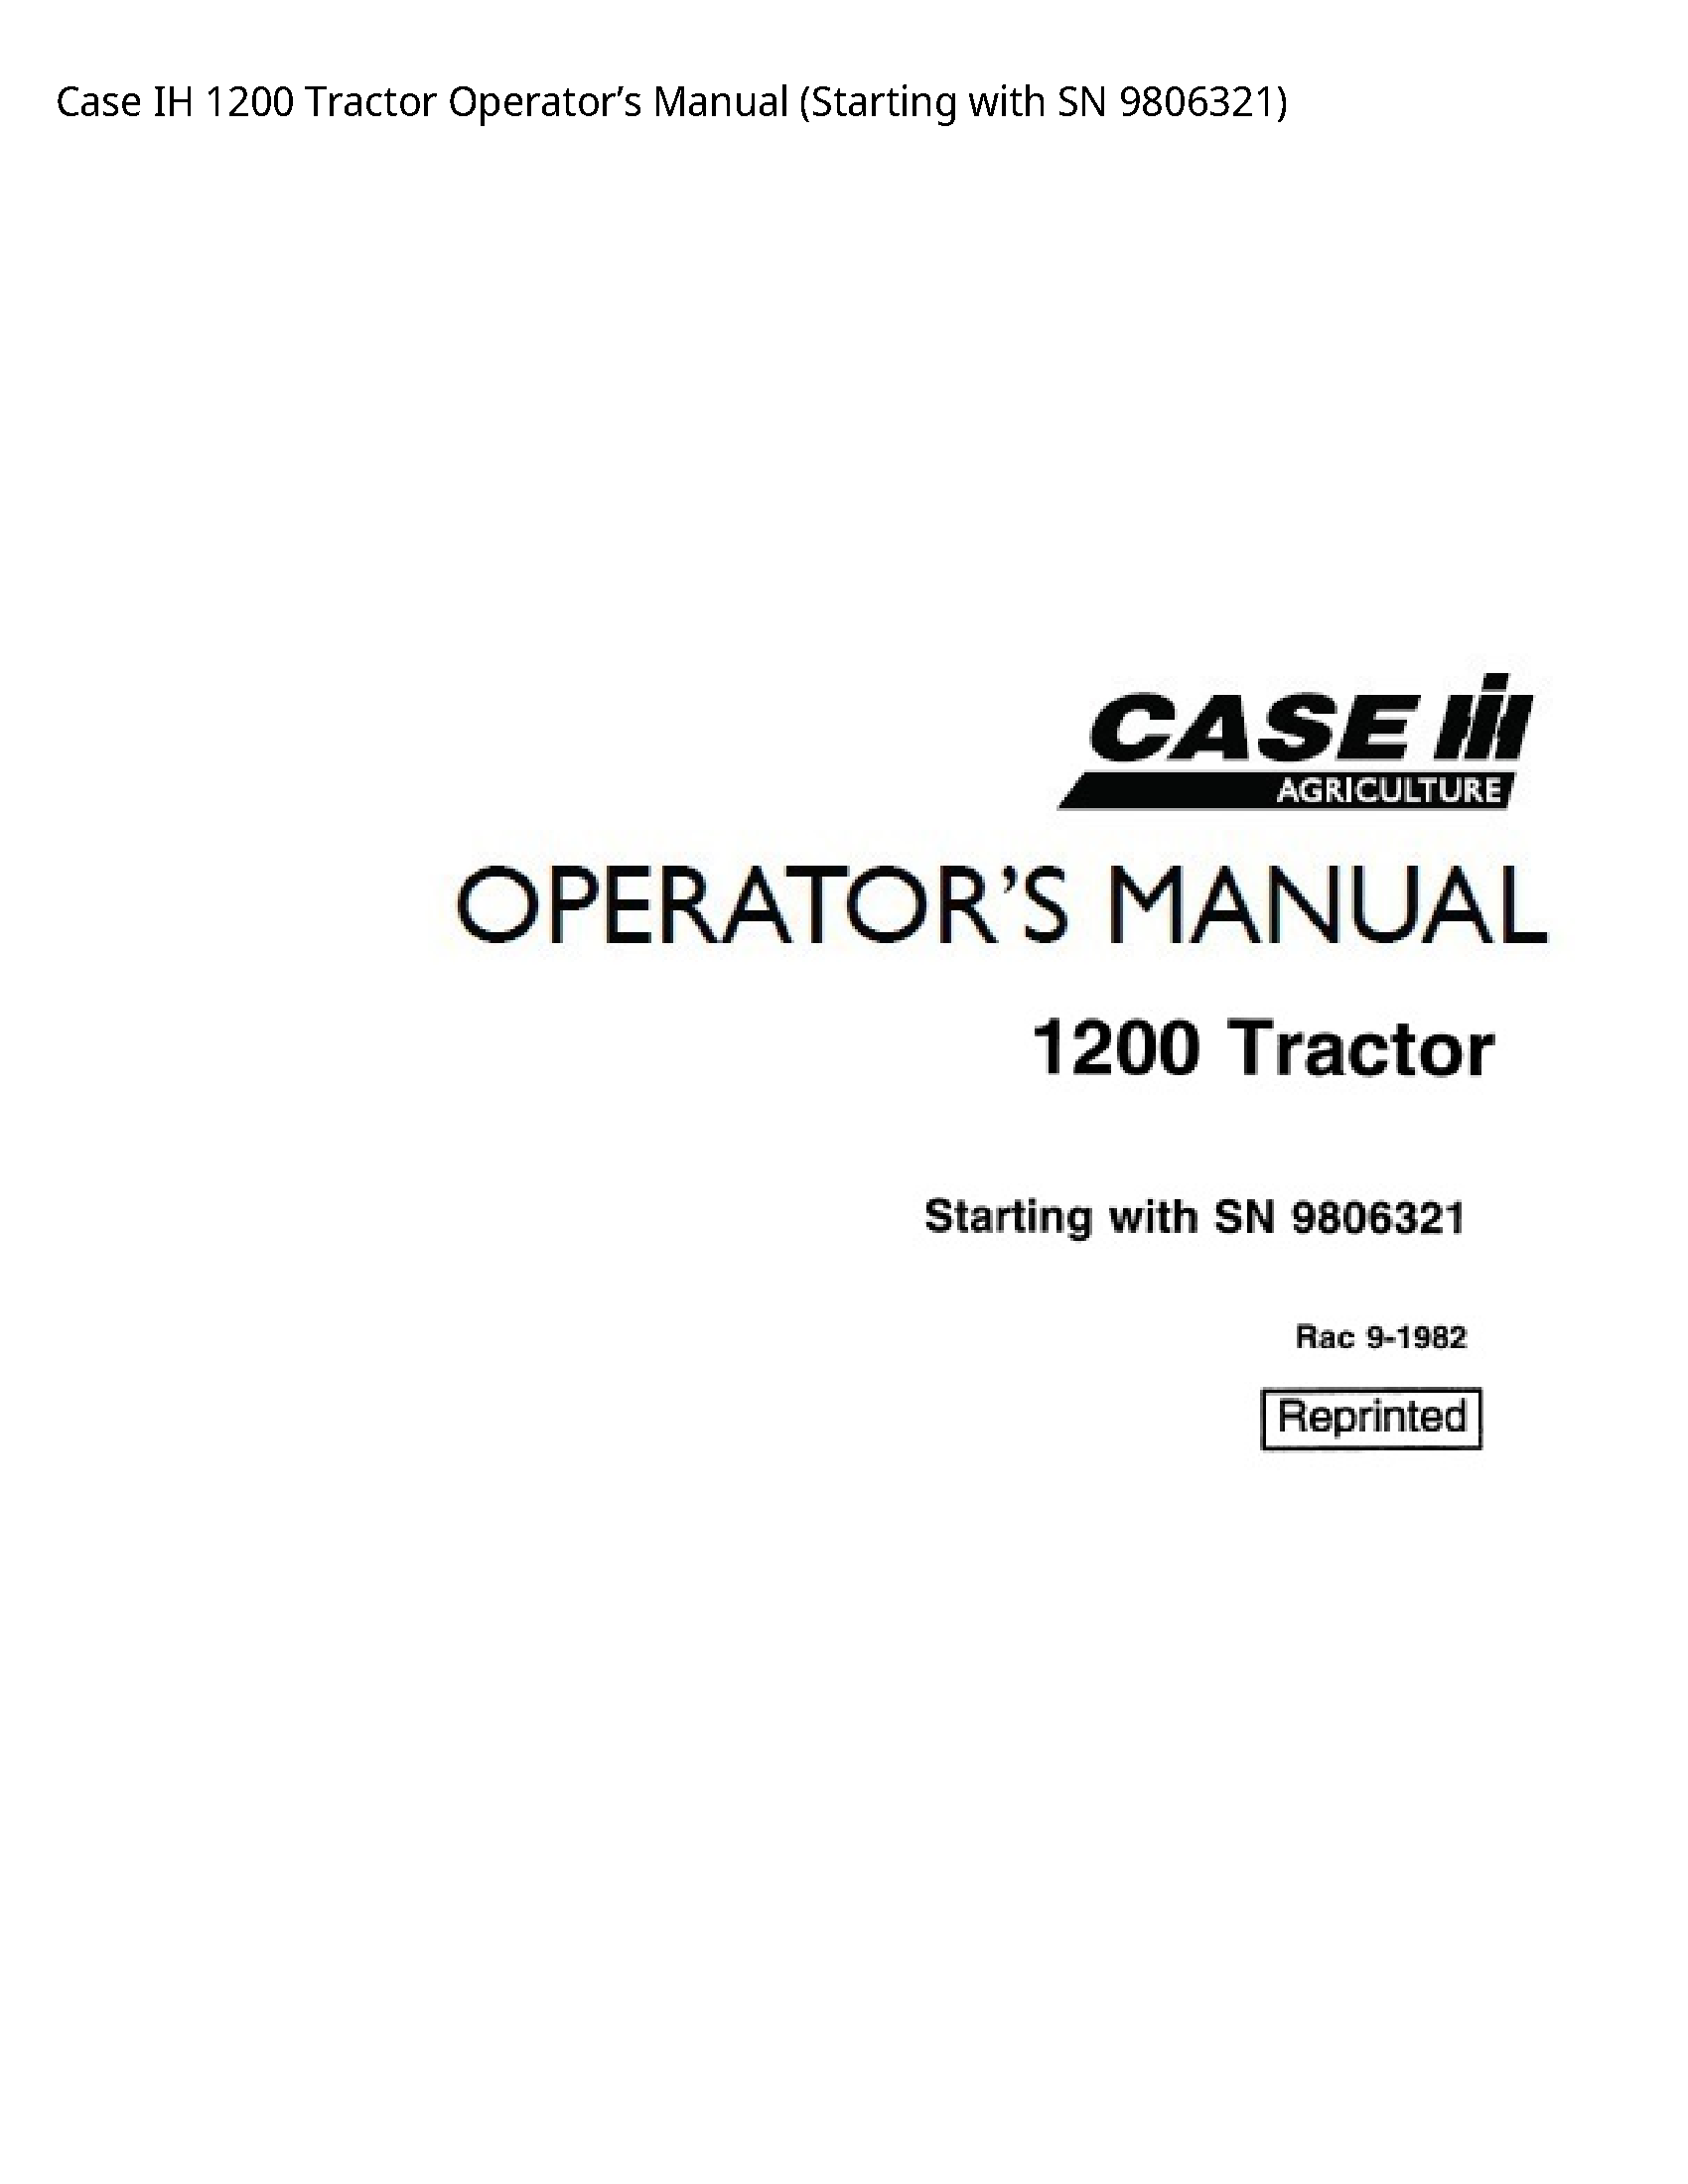 Case/Case IH 1200 IH Tractor Operator’s manual